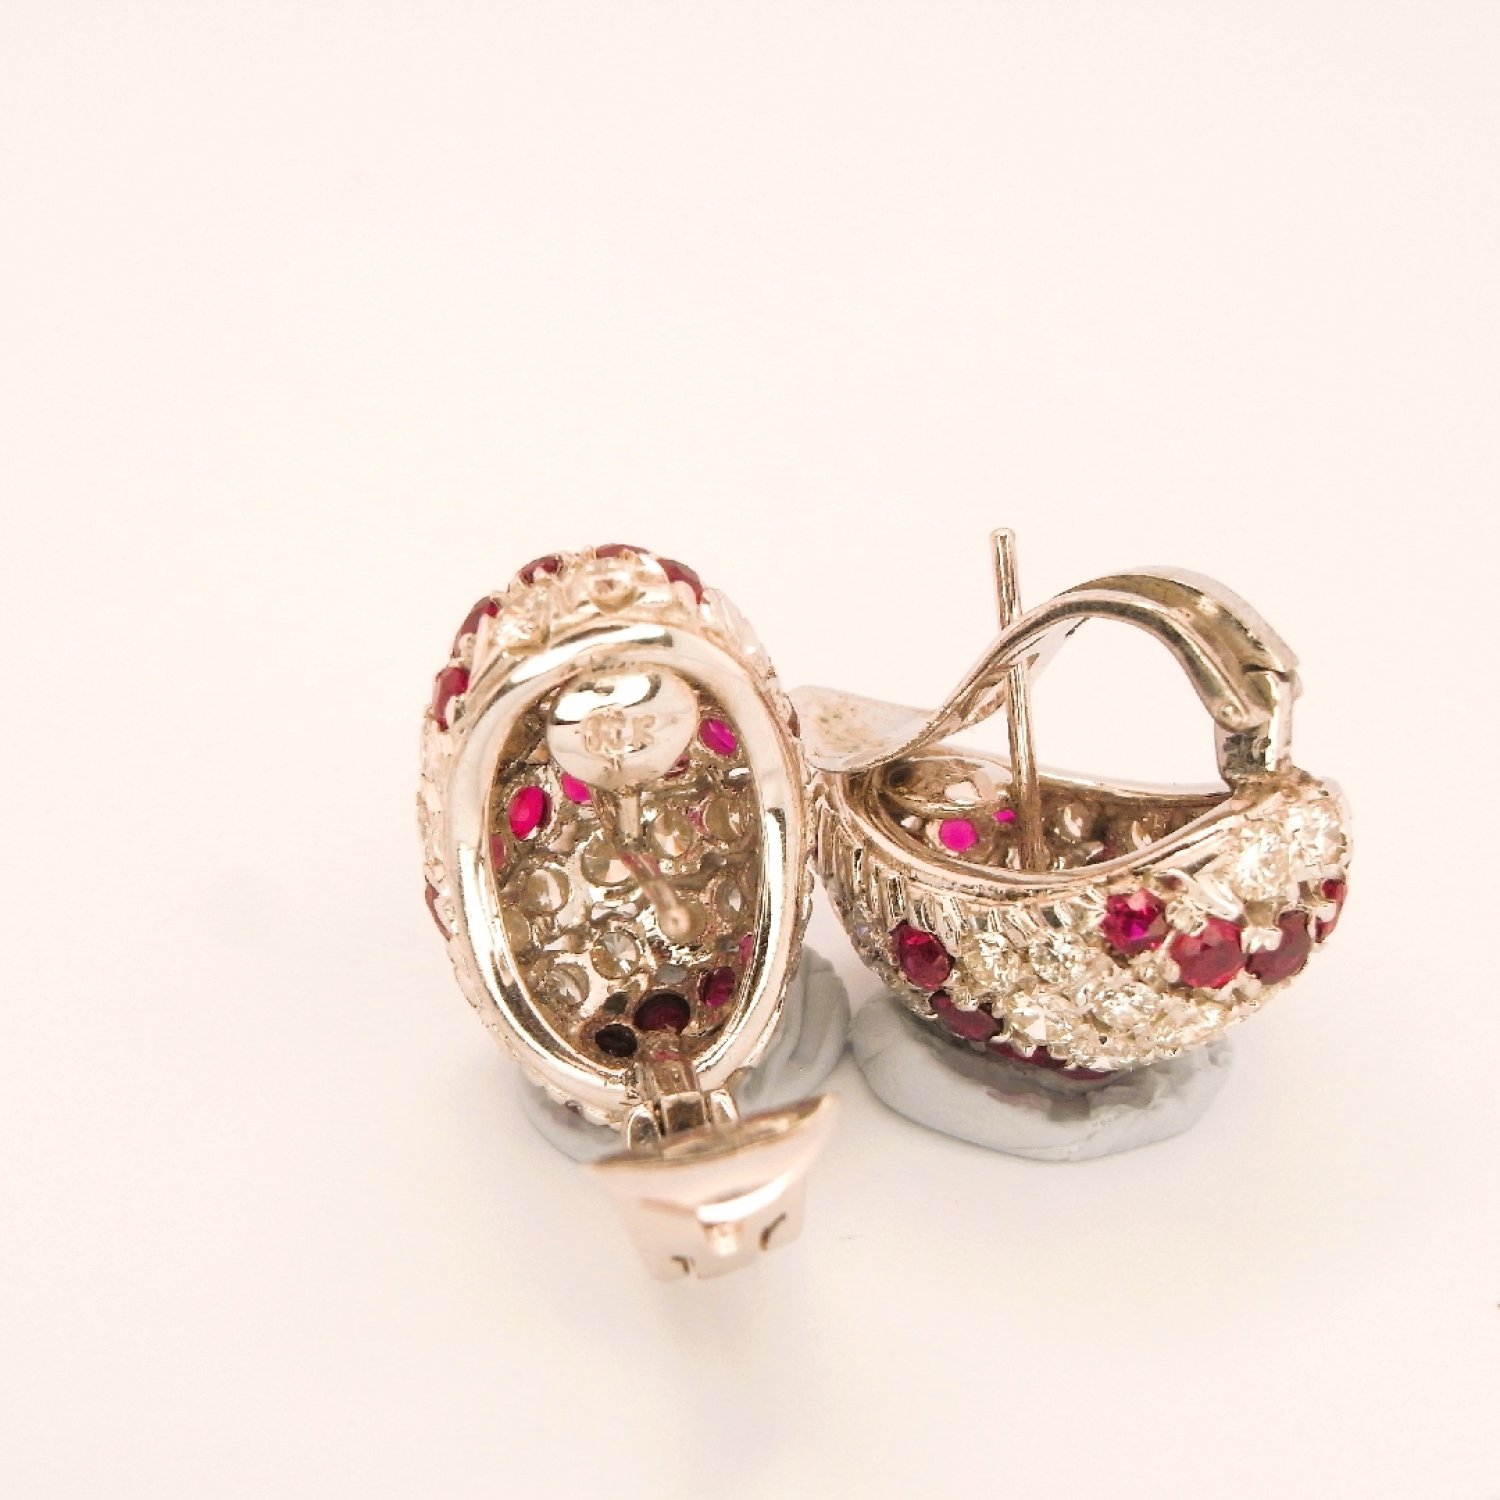 NO HEAT UNHEATED Ruby Diamond Earrings 18K White Gold 750 18kt Dome Earrings 1950s Diamond Earrings Mid Century Earrings Natural Red Ruby